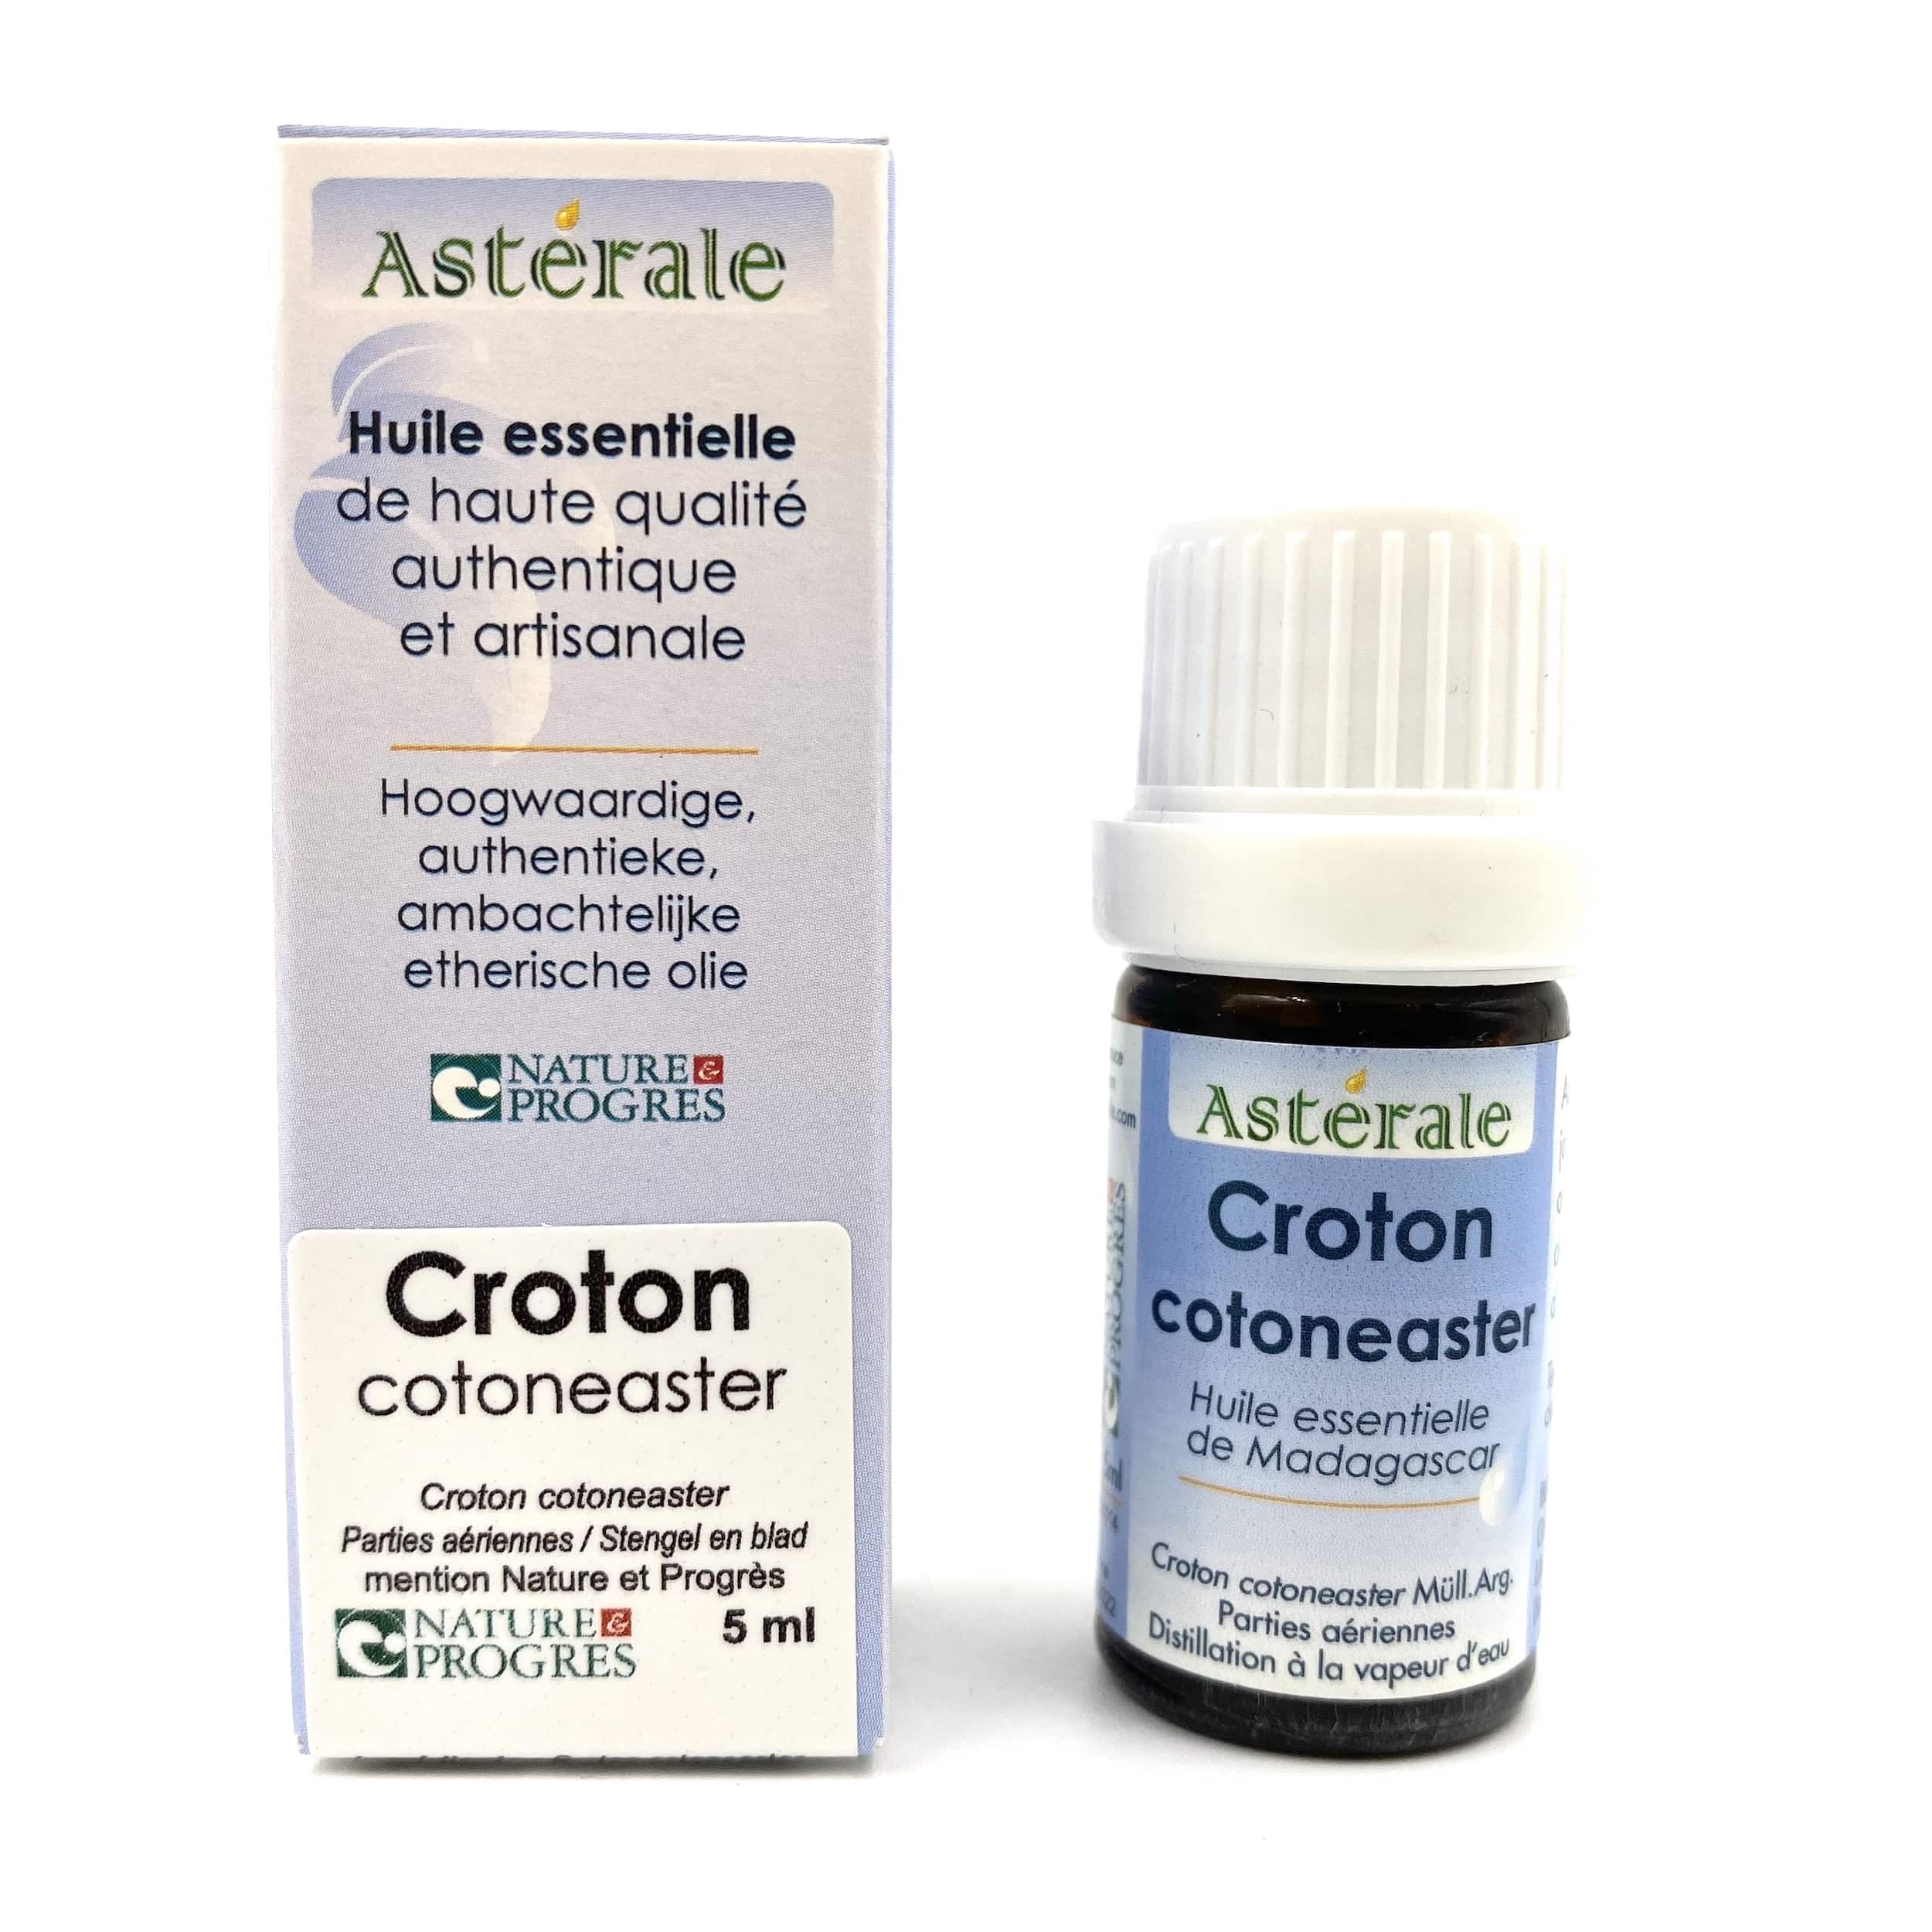 Huile Essentielle de Croton cotoneaster Astérale